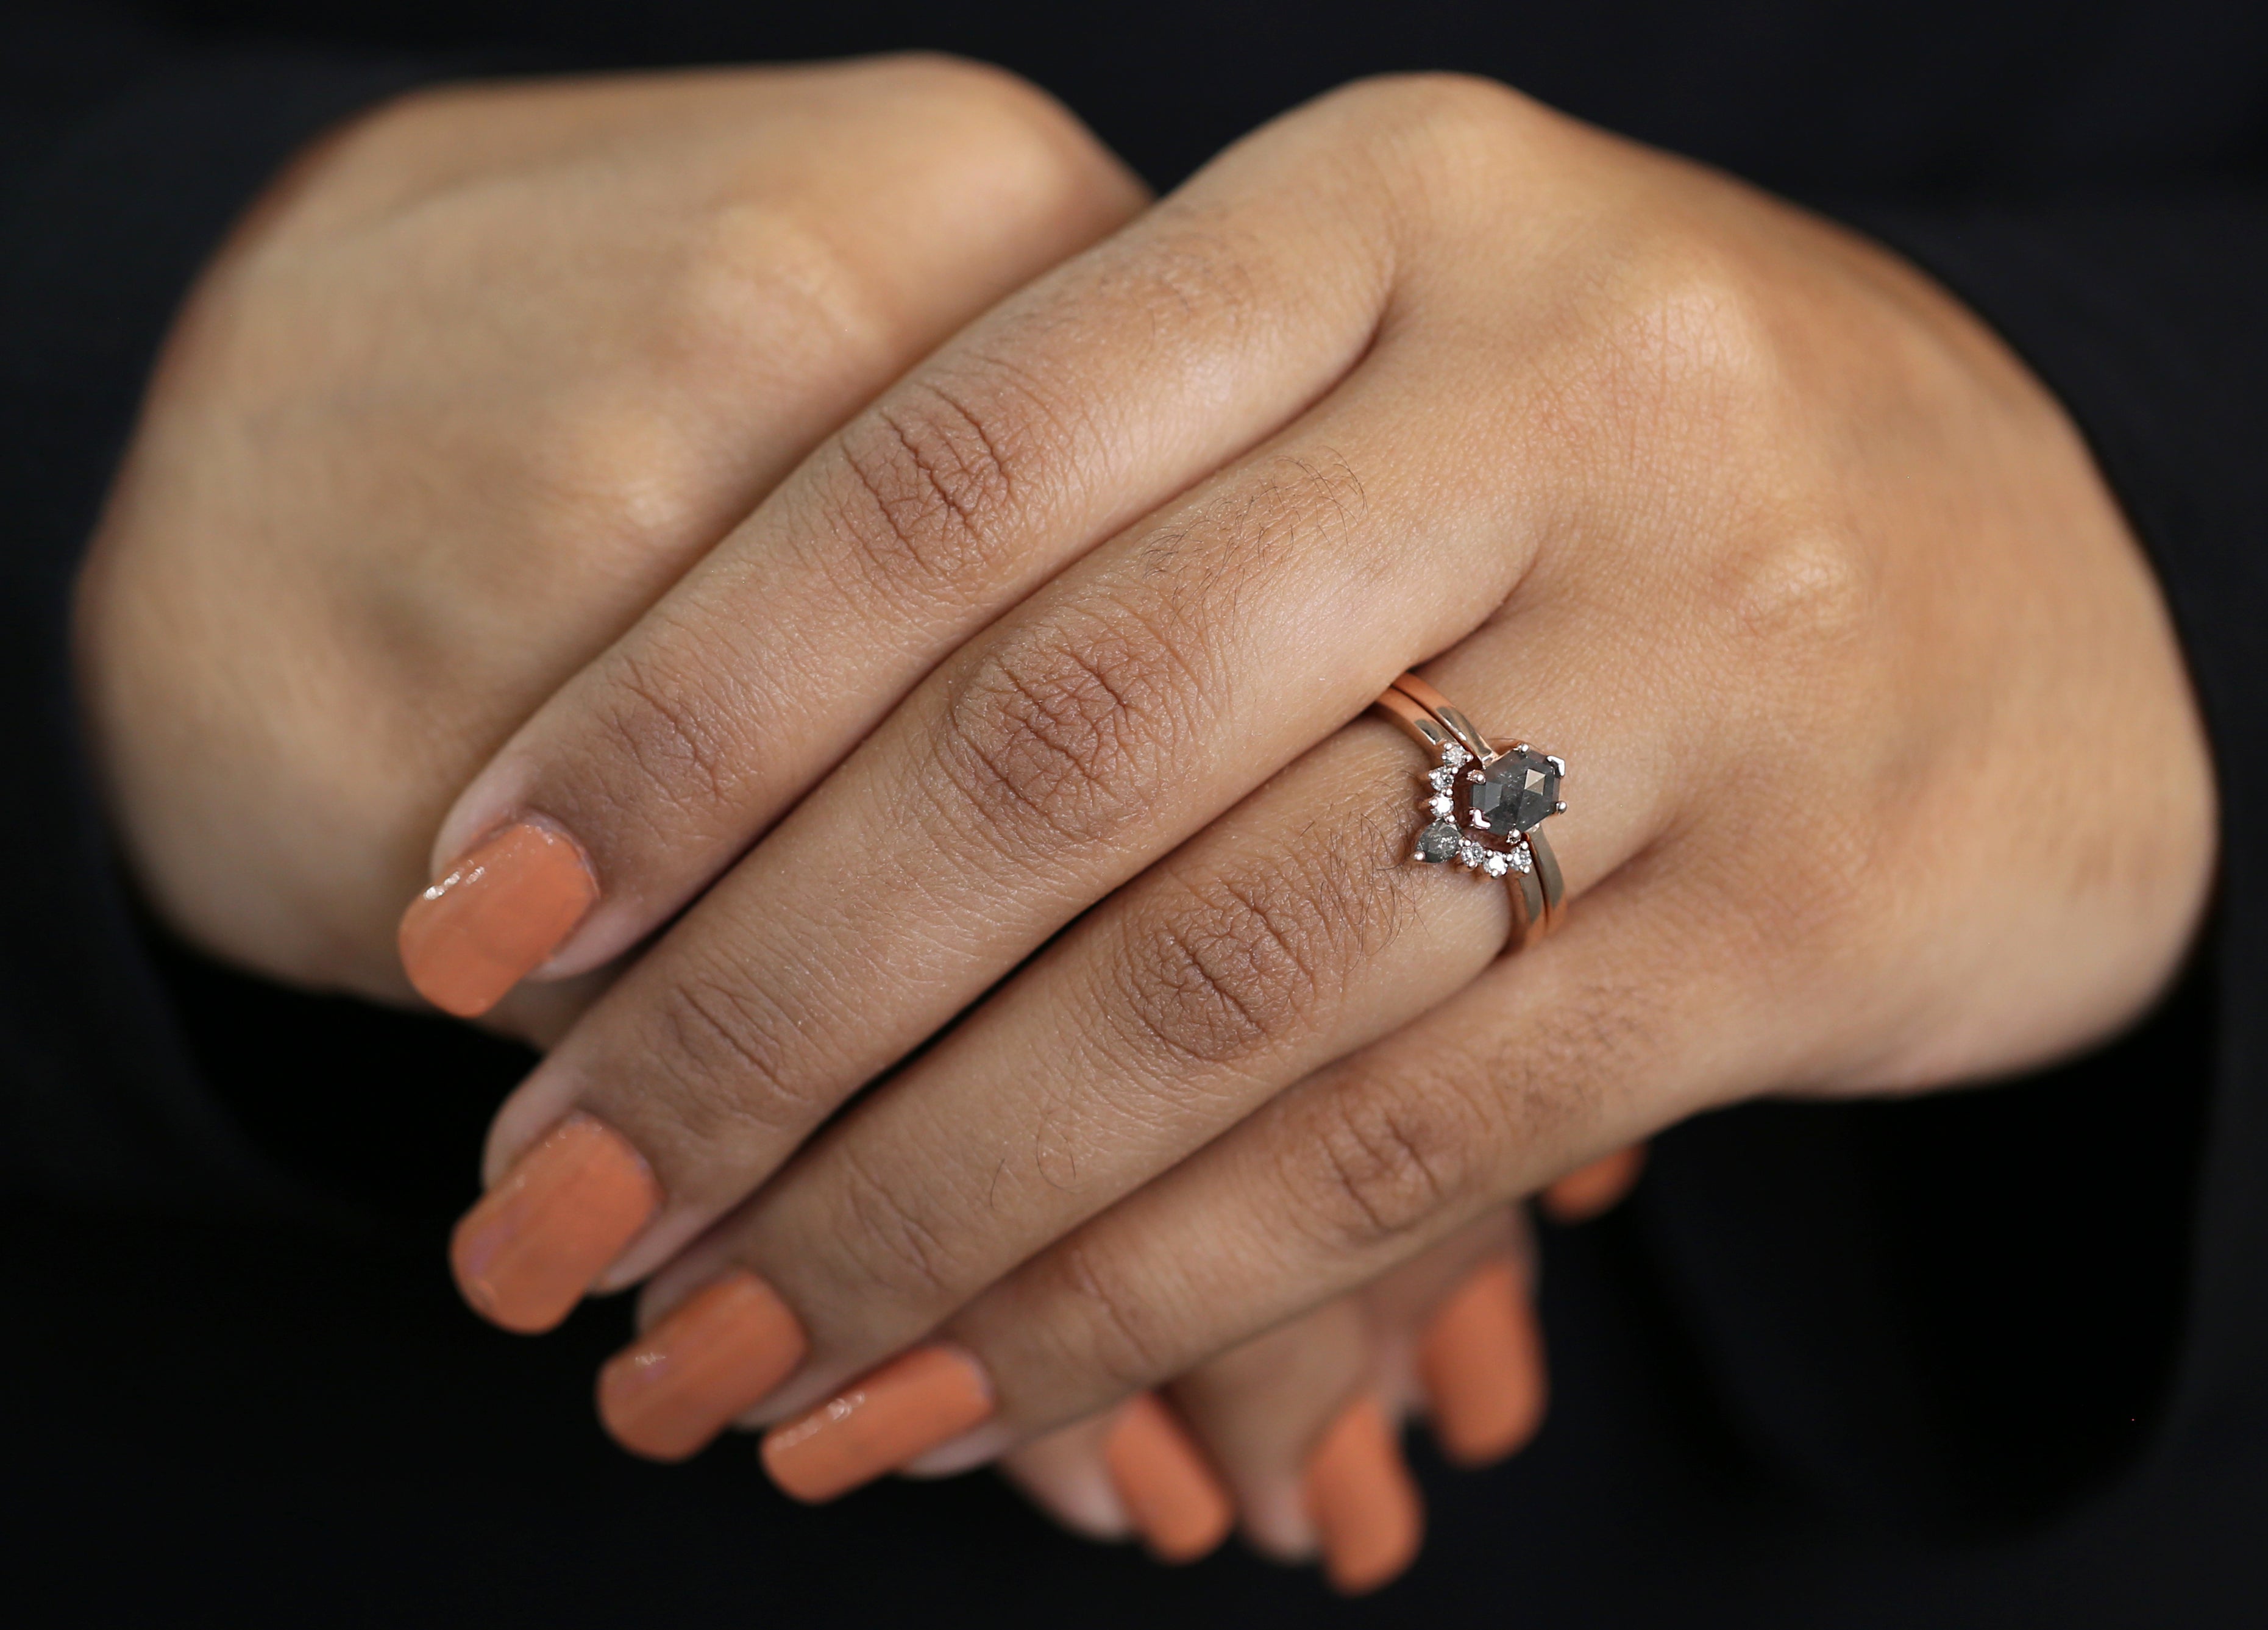 Hexagon Salt And Pepper Diamond Ring Engagement Wedding Gift Ring 14K Solid Rose White Yellow Gold Ring Set 0.70 CT QL8153